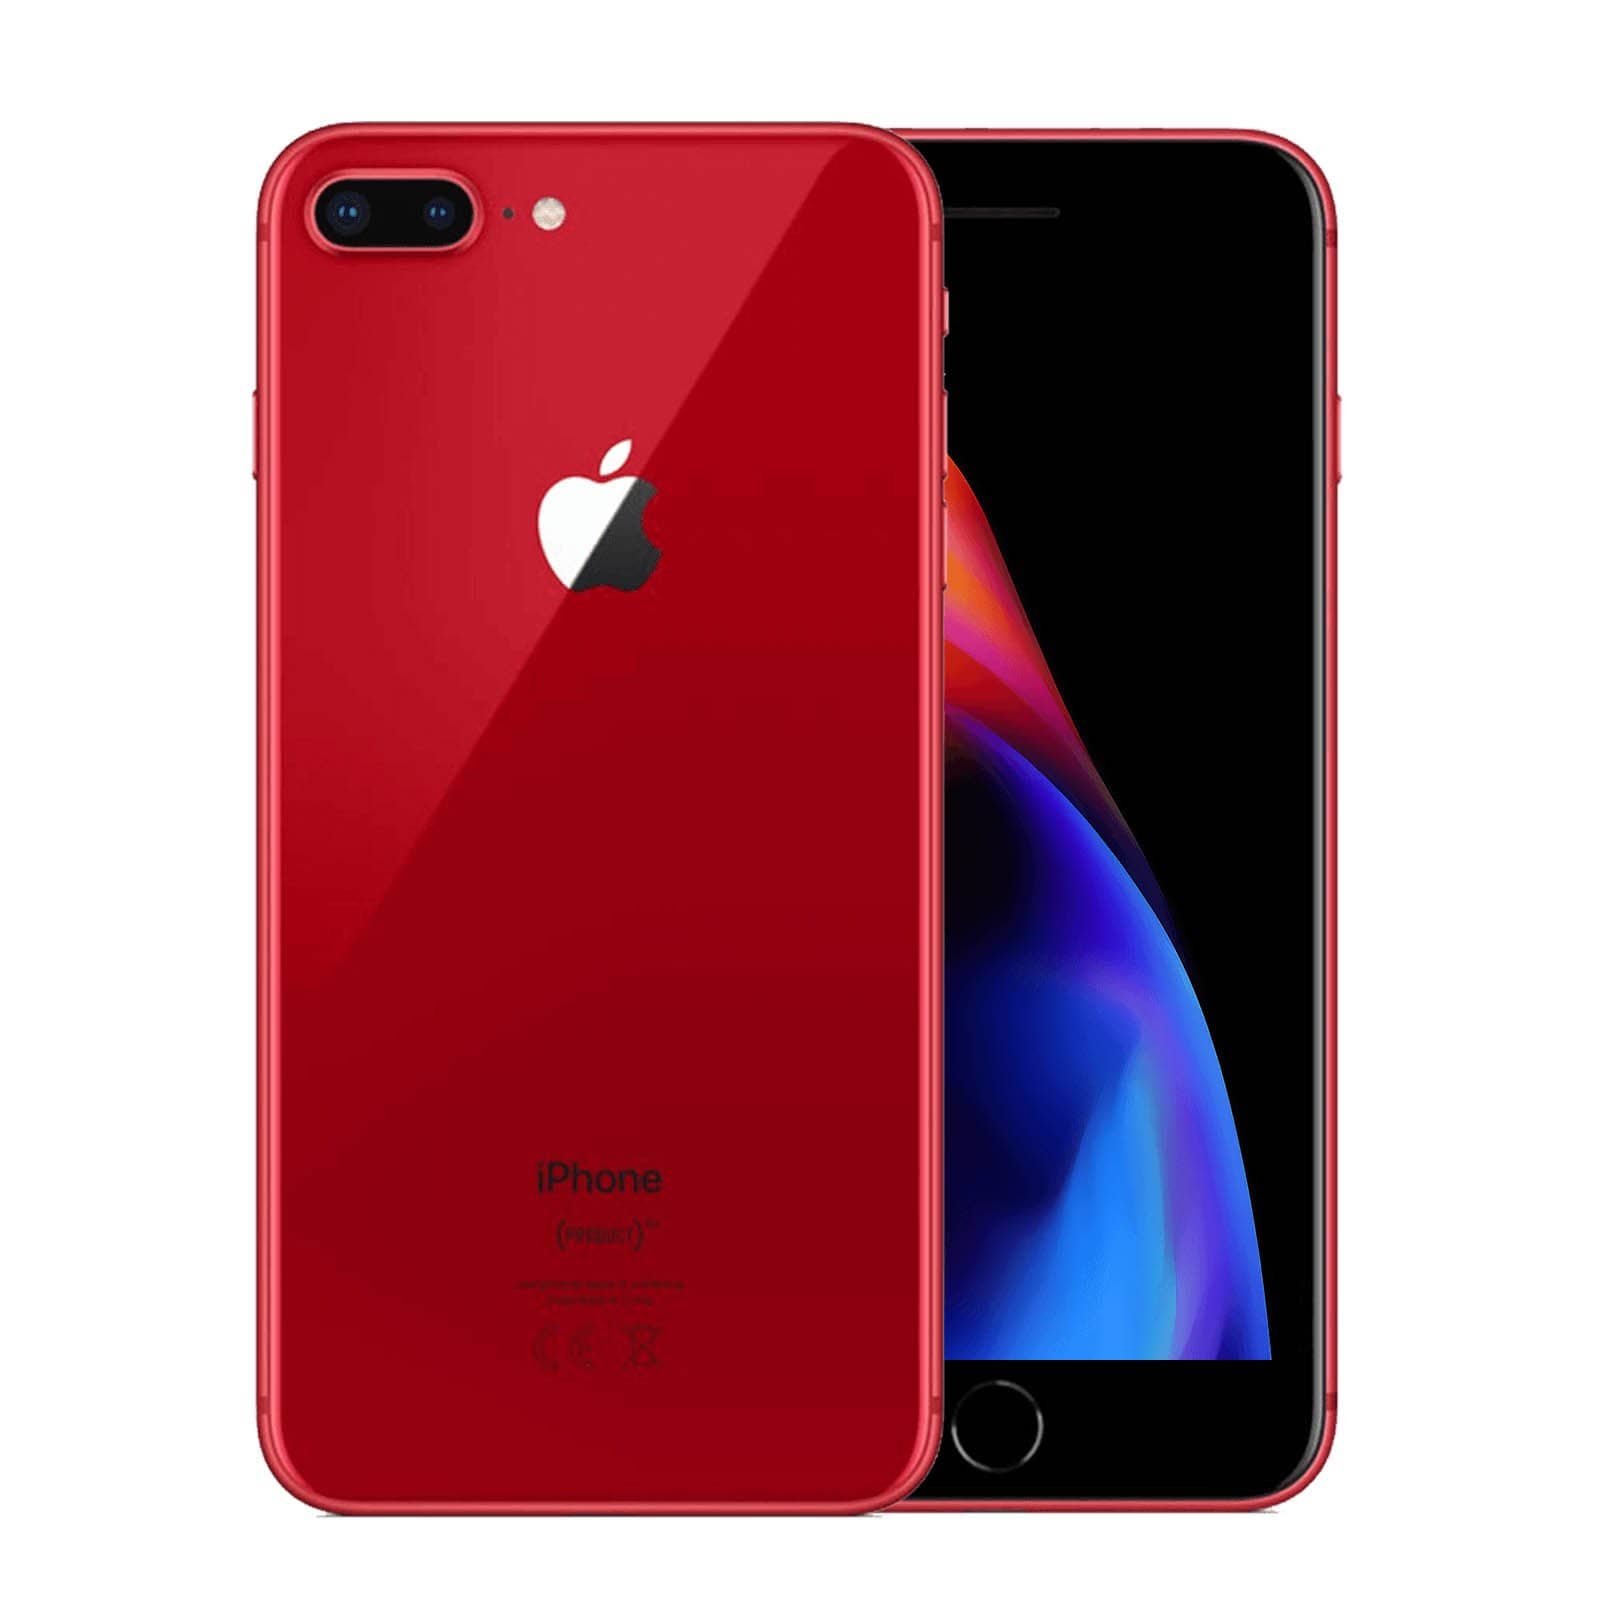 Apple iPhone 8 Plus 64GB Product Red Good - Unlocked